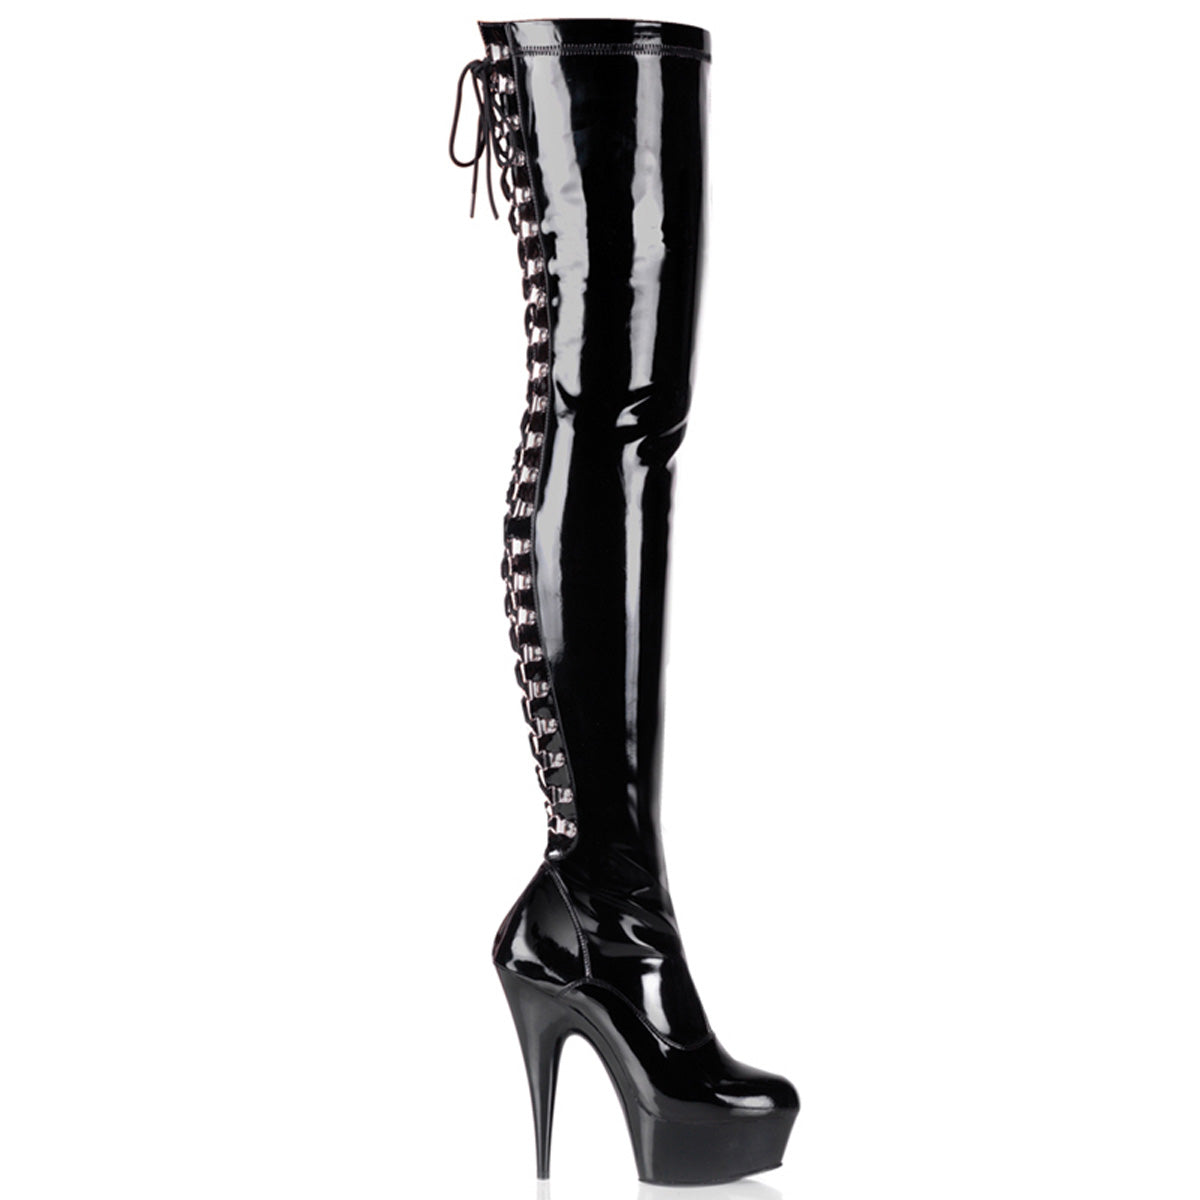 DELIGHT-3063 6" Heel Black Stretch Patent Pole Dancer Boots